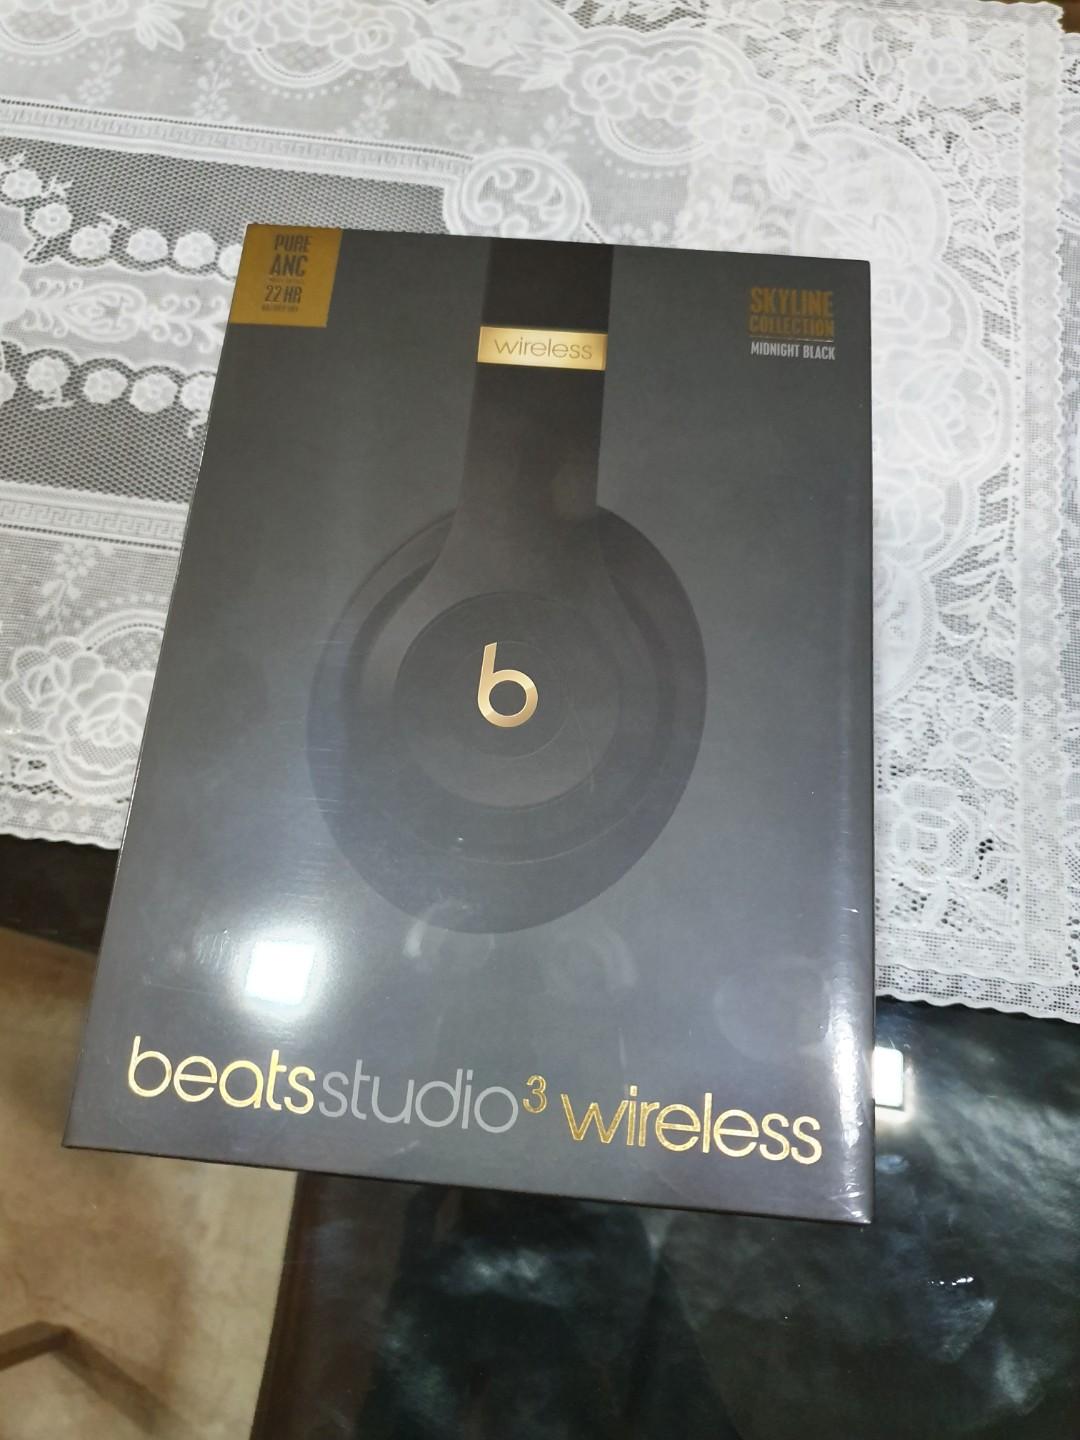 beats studio 3 wireless box